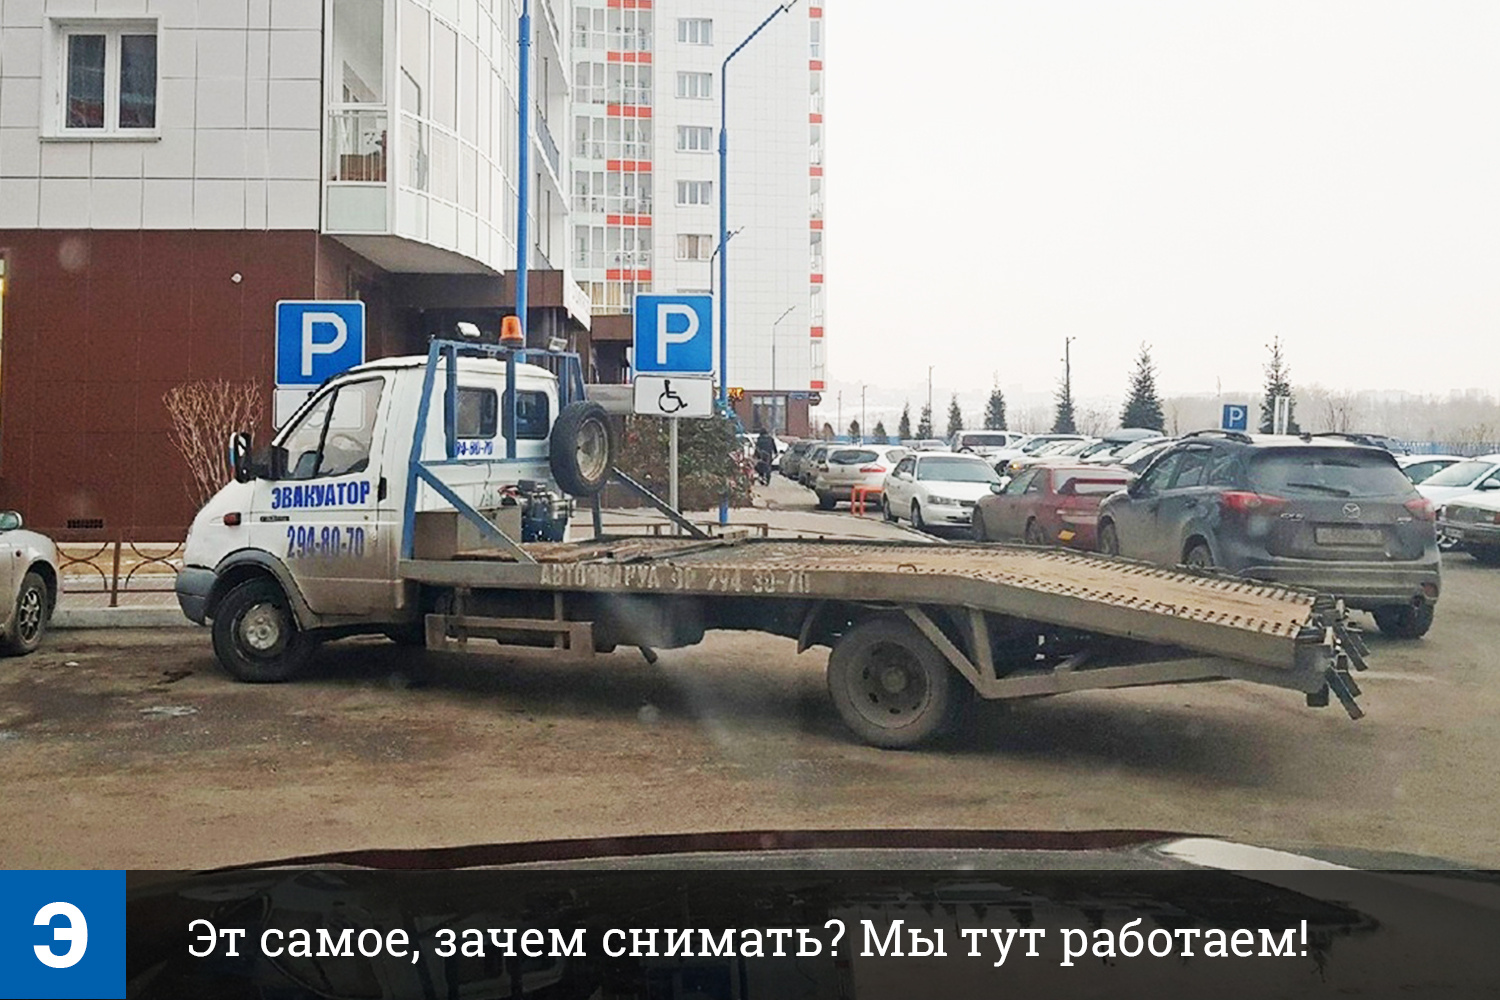 За парковку на месте для инвалидов грозит штраф 5000 рублей согласно ч. 2 ст. 12.19 КоАП